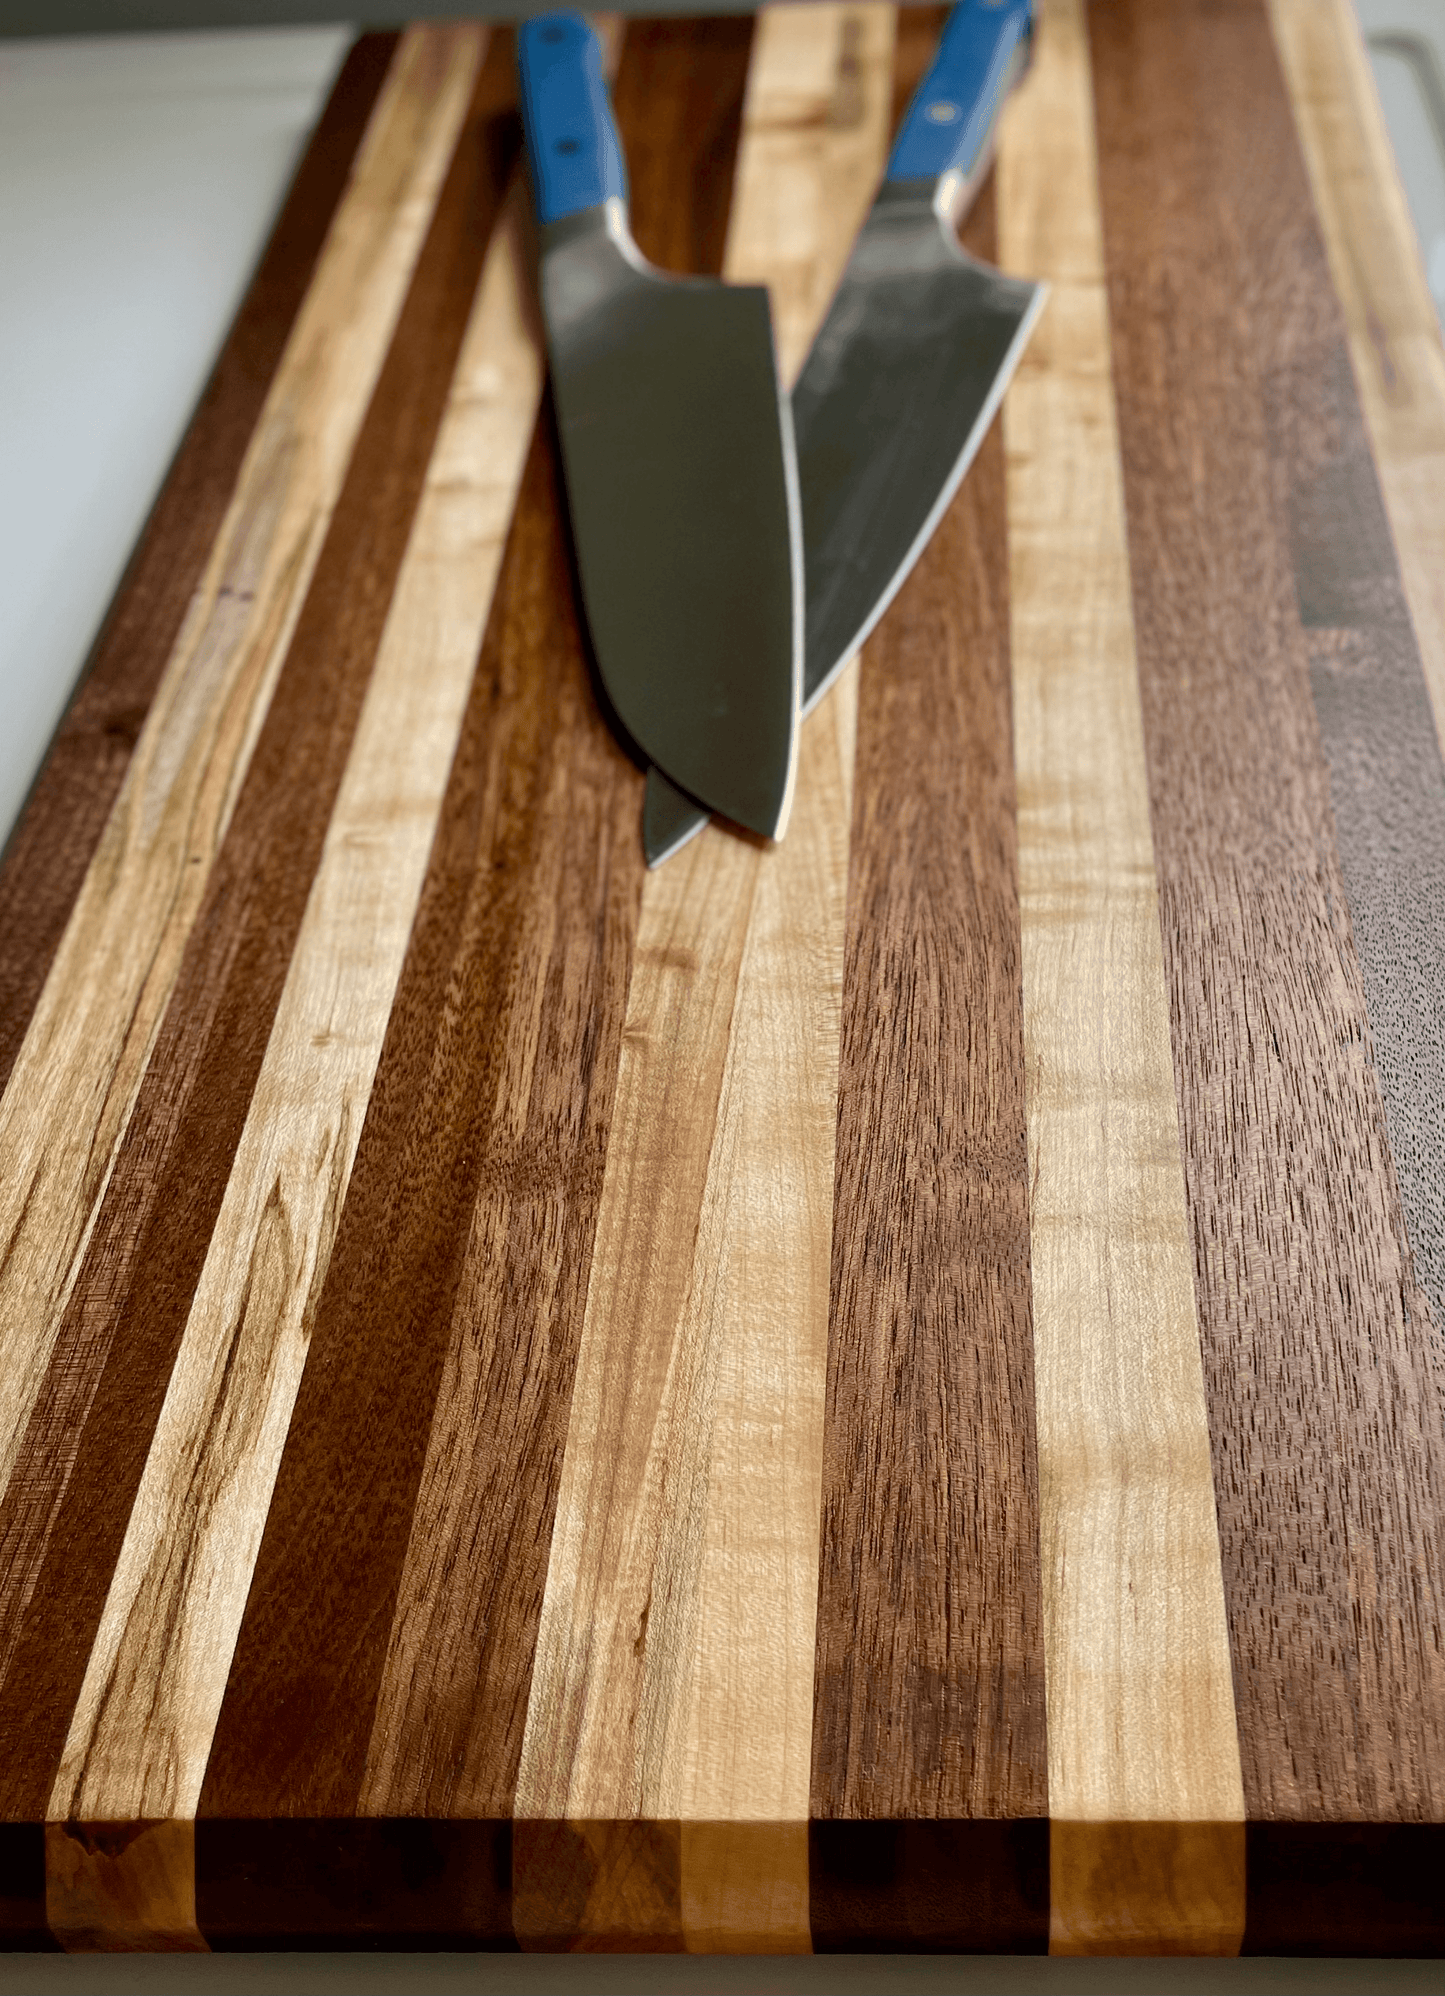 Cutting Board - Walnut, Cherry, and Maple Hardwood - 13" x 20" - Salam Wood Works, LLC